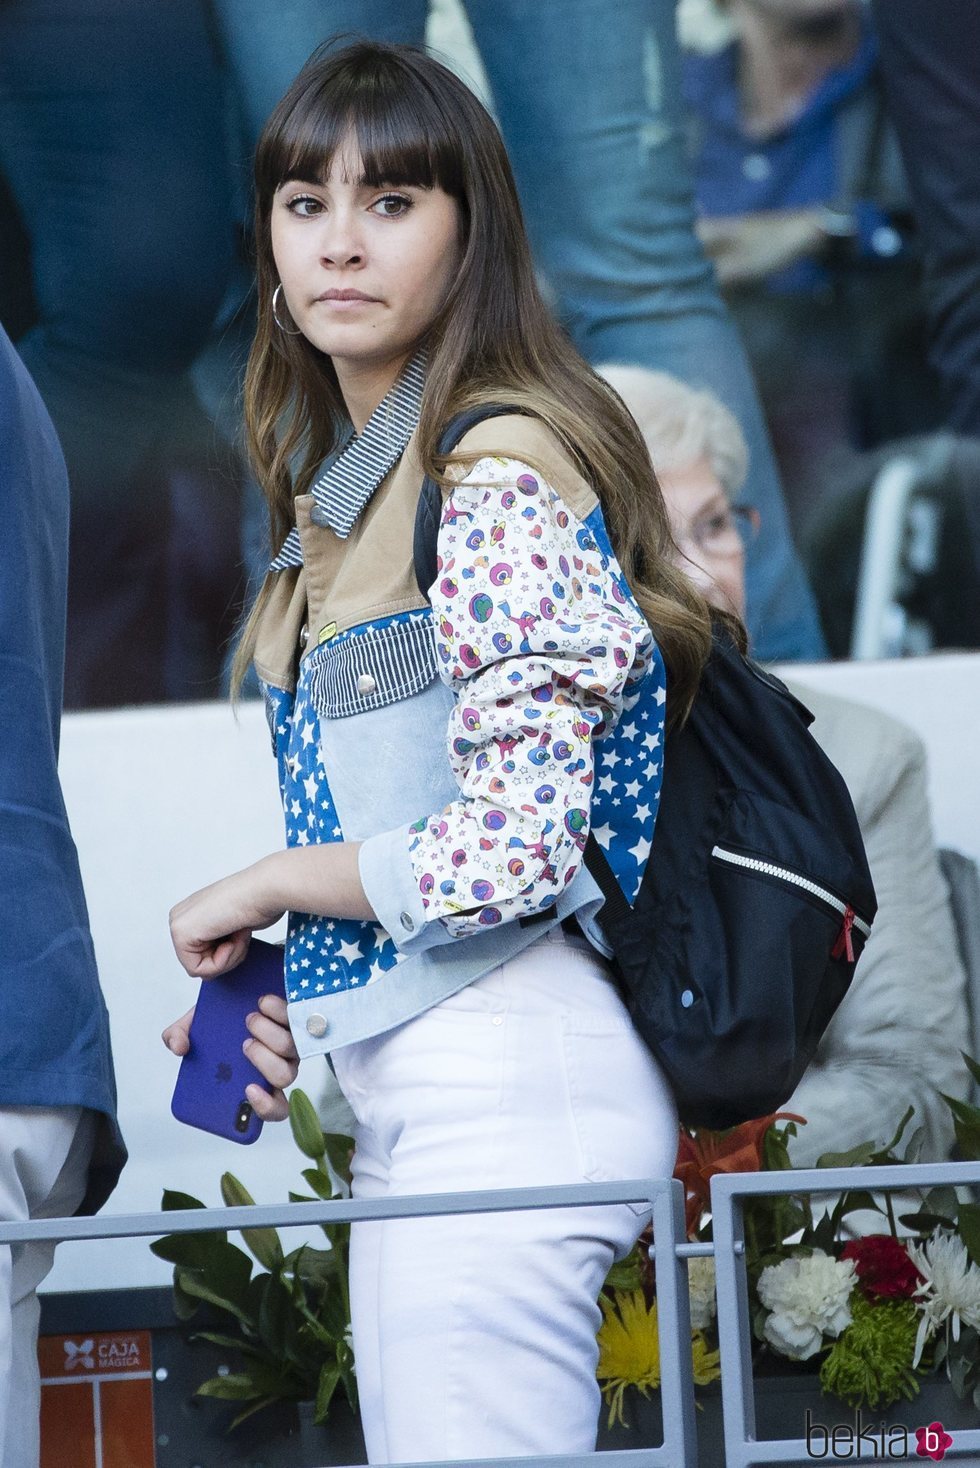 Aitana Ocaña en el Madrid Open 2018